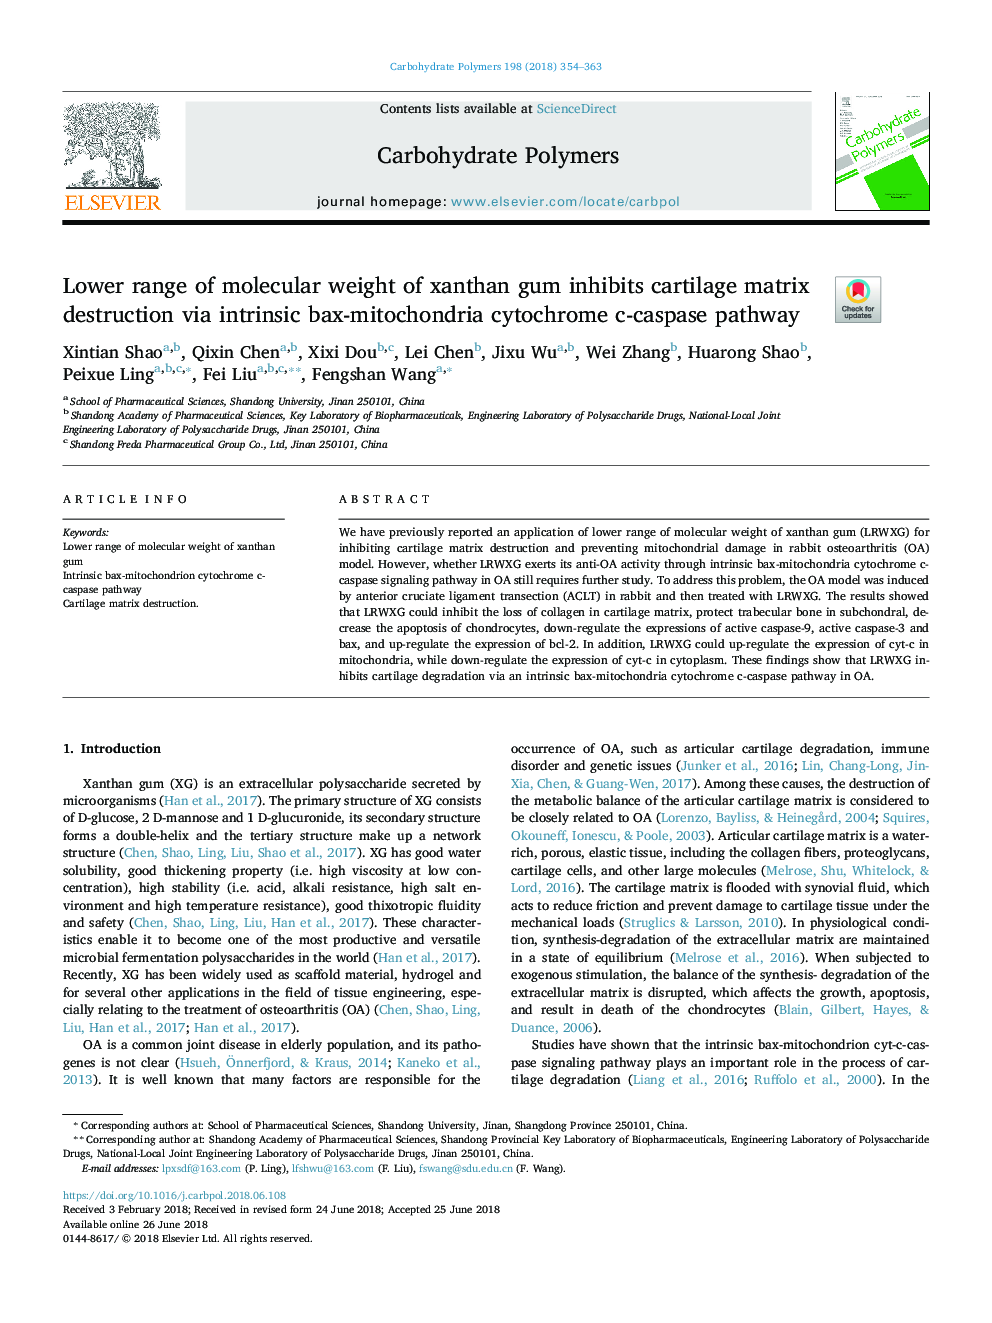 Lower range of molecular weight of xanthan gum inhibits cartilage matrix destruction via intrinsic bax-mitochondria cytochrome c-caspase pathway